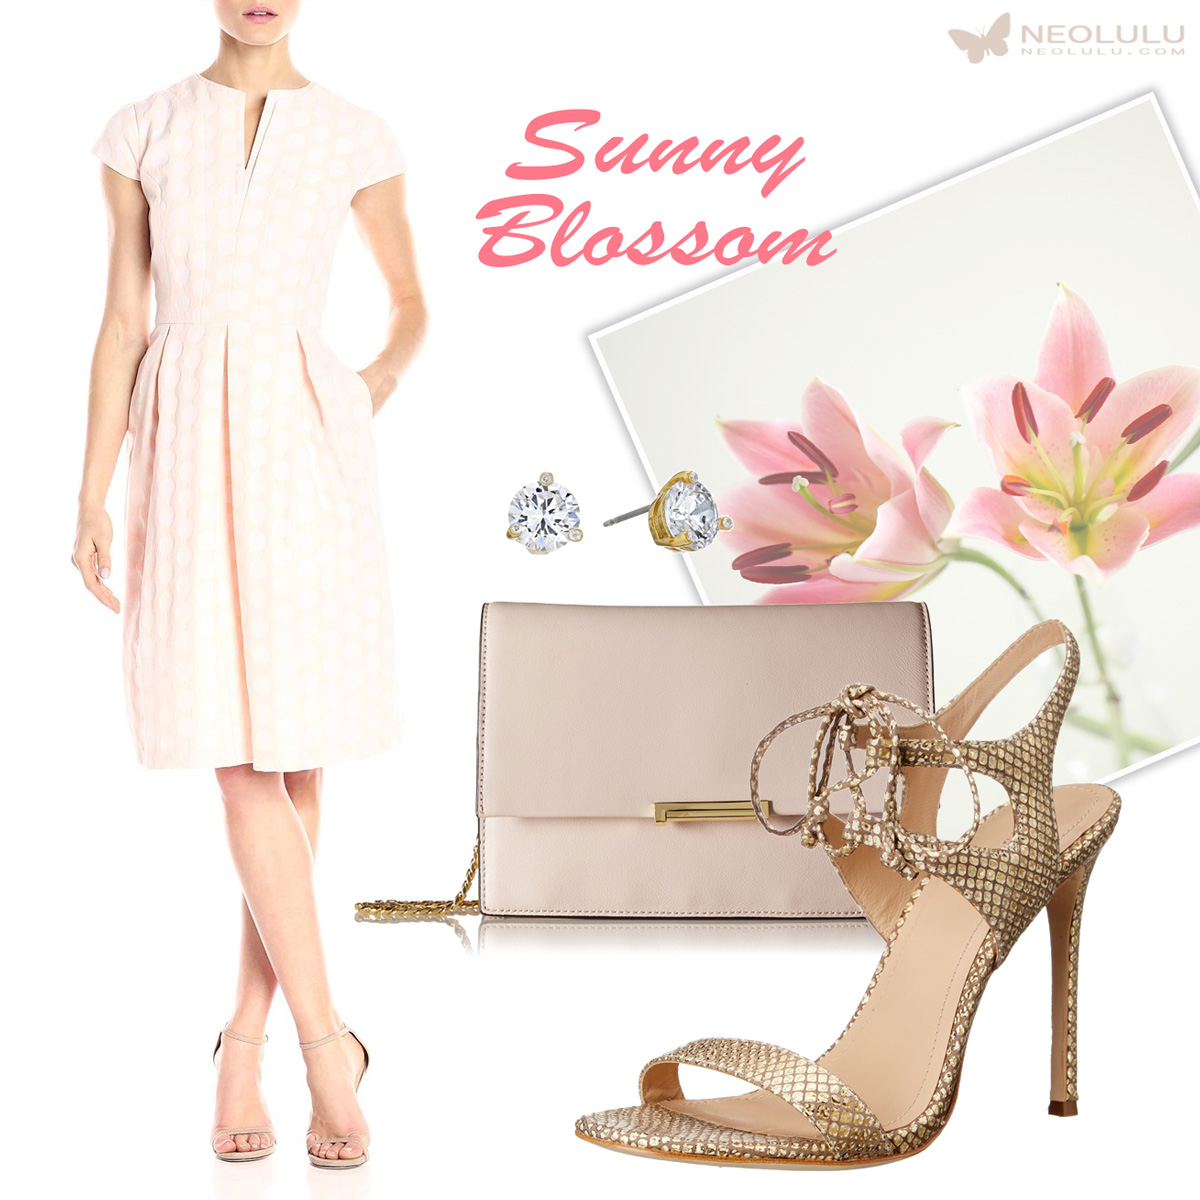 Sunny Blossom: Helene Bergman V-Neck Dress Outfit for Cocktail Party